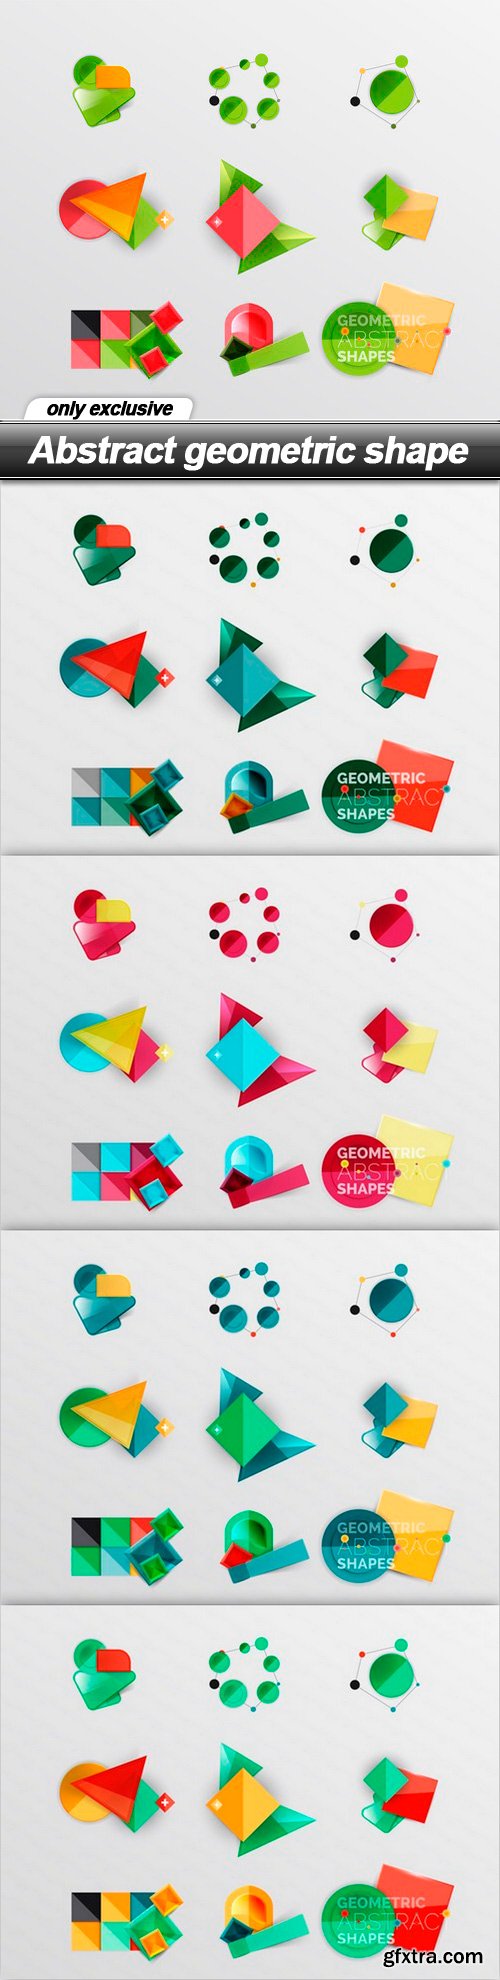 Abstract geometric shape - 5 EPS